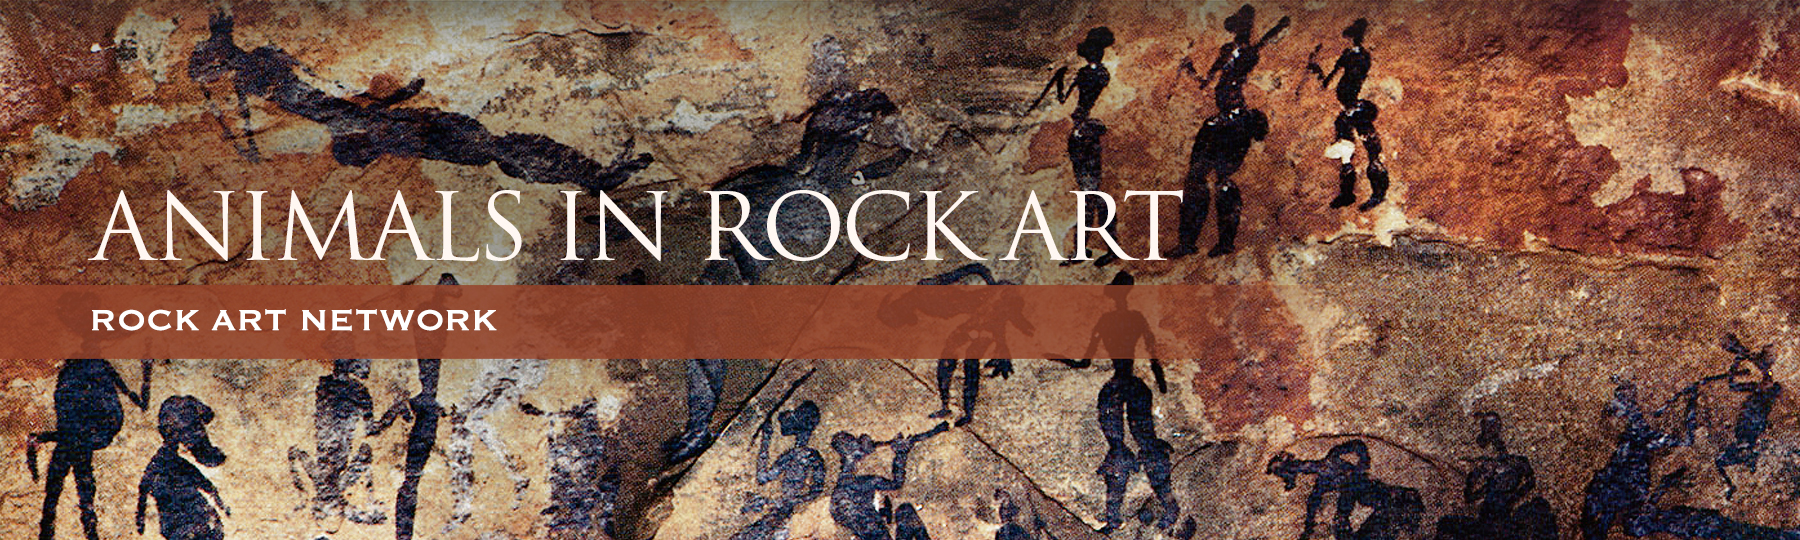 Rock Art Network Aron Mazel